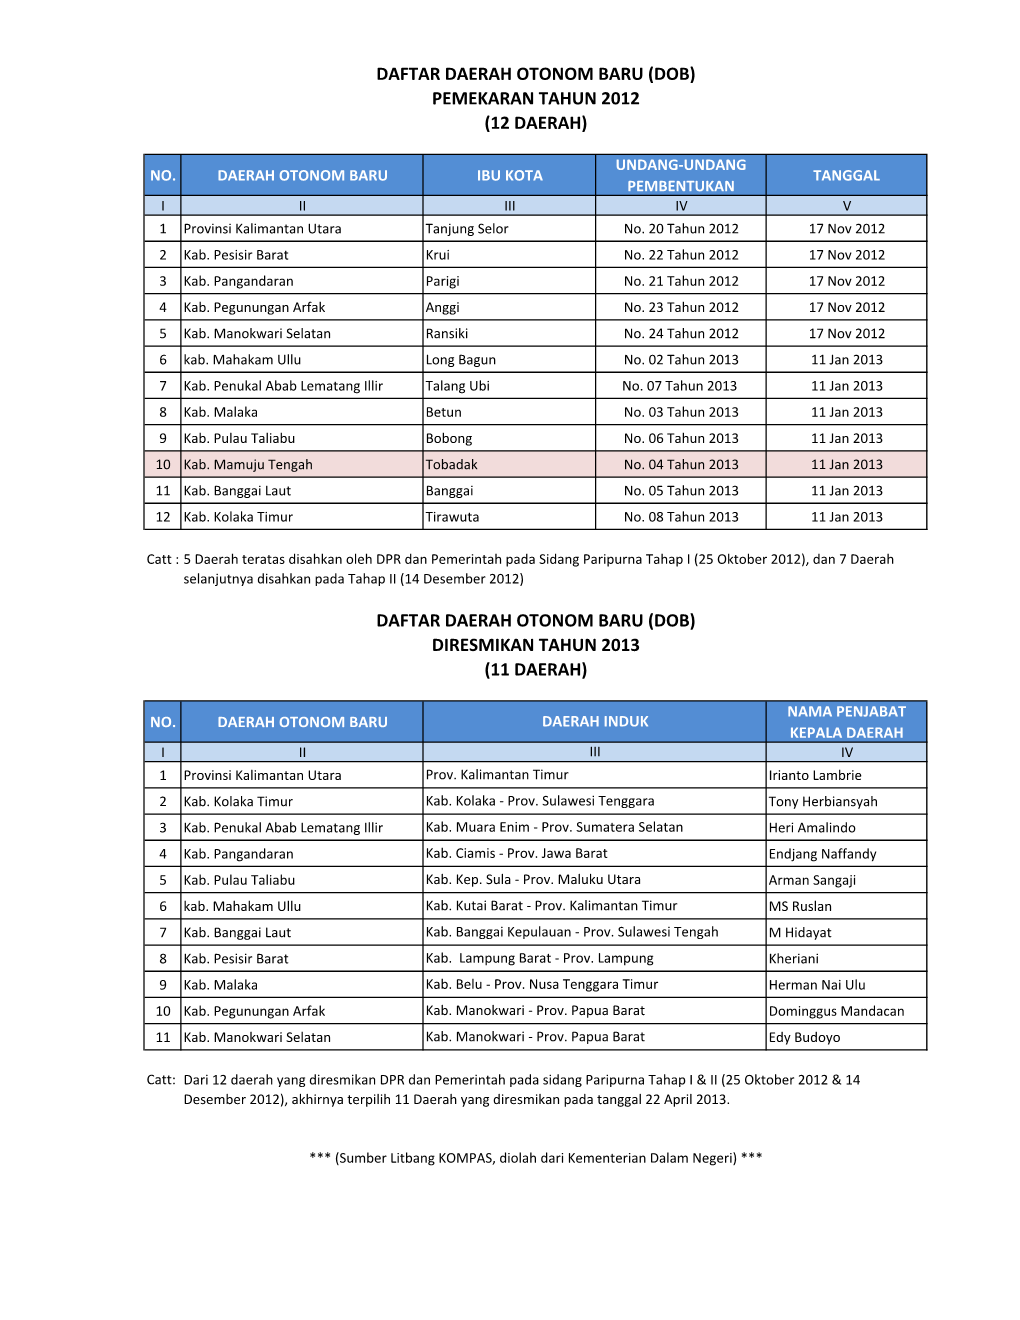 Daftar DOB Pemekaran 2012